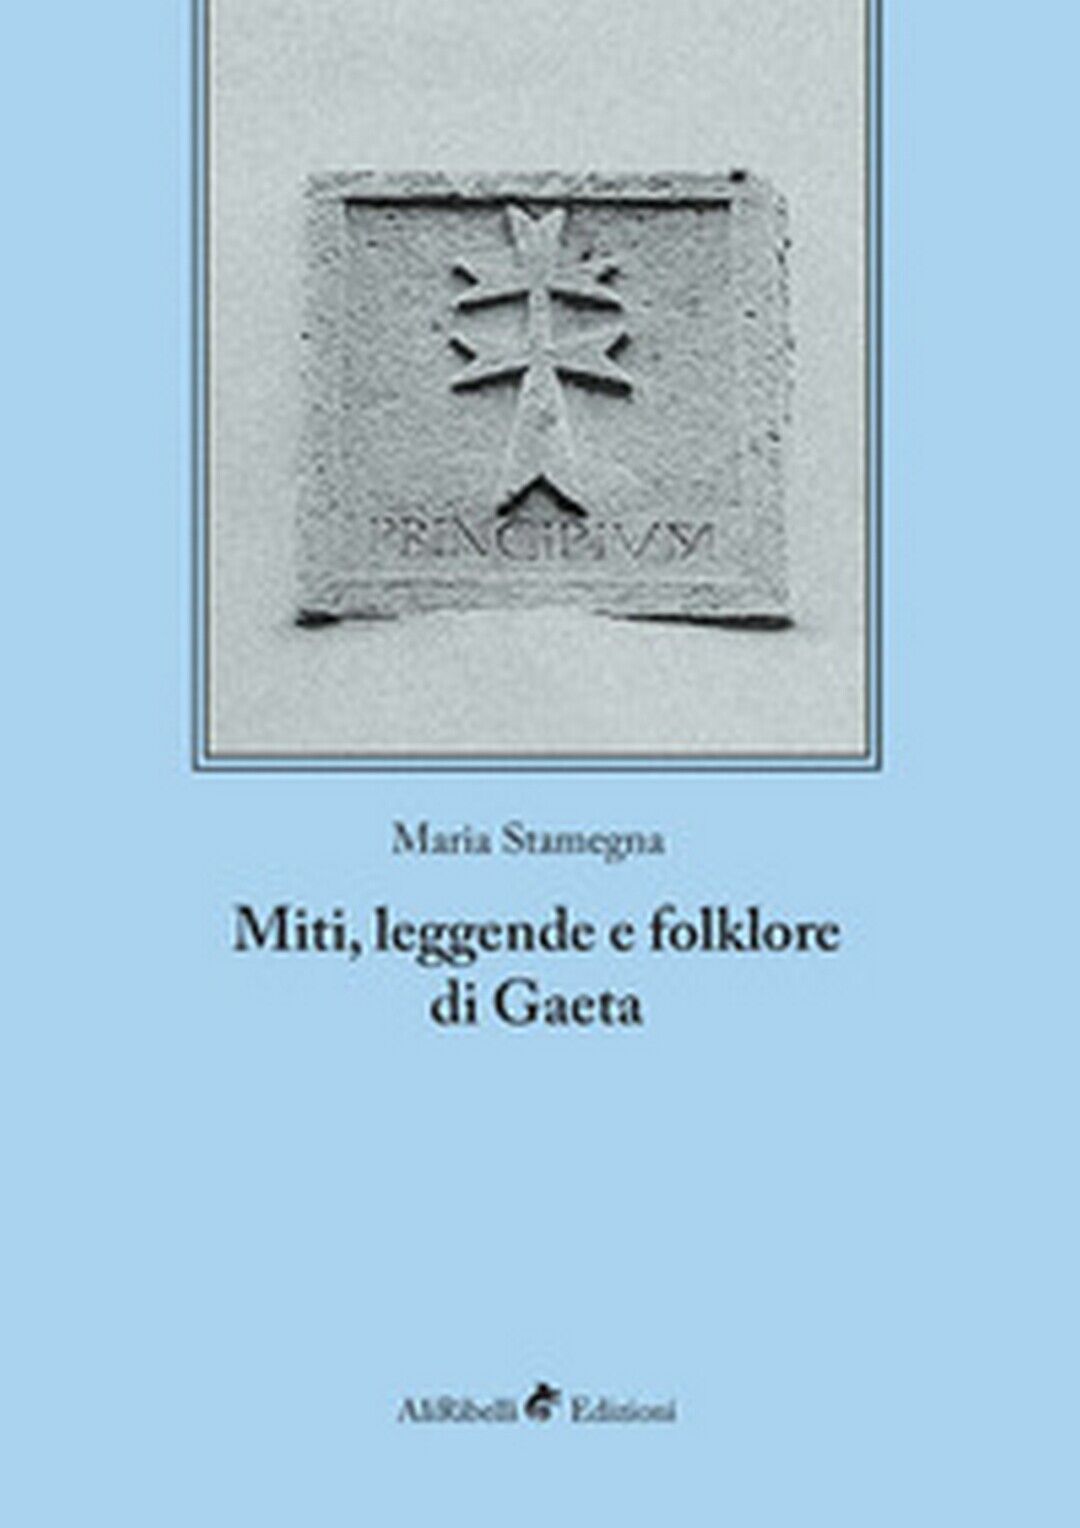 Miti, leggende e folklore - Gaeta  di Maria Stamegna,  2018,  Ali Ribelli Ed.